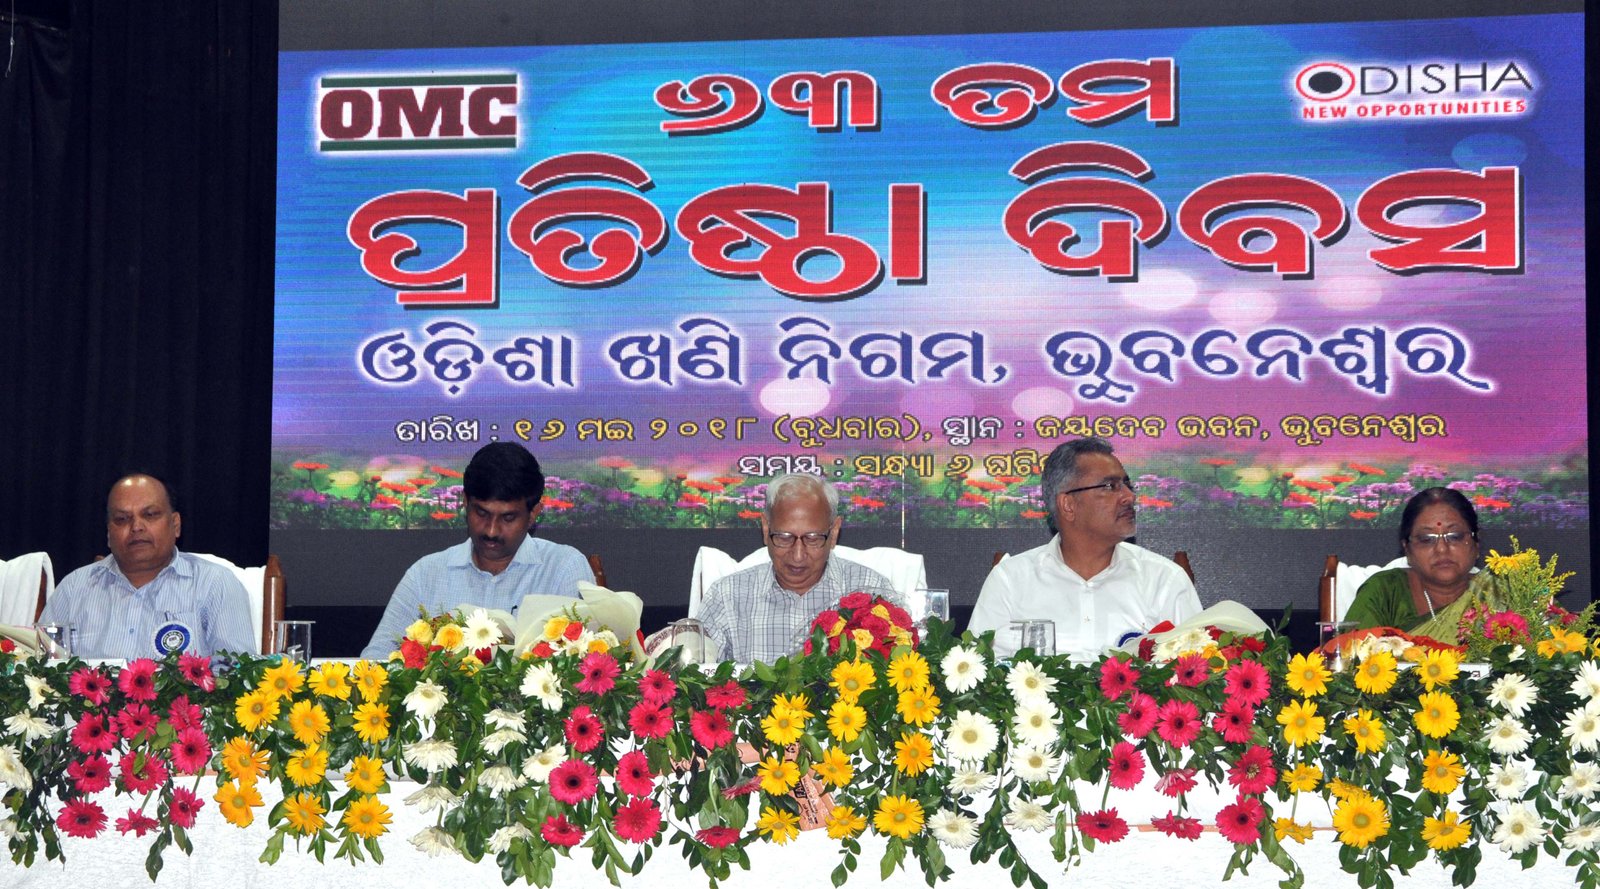 Odisha Mining Corporation (OMC) celebrated its 63rd Foundation Day